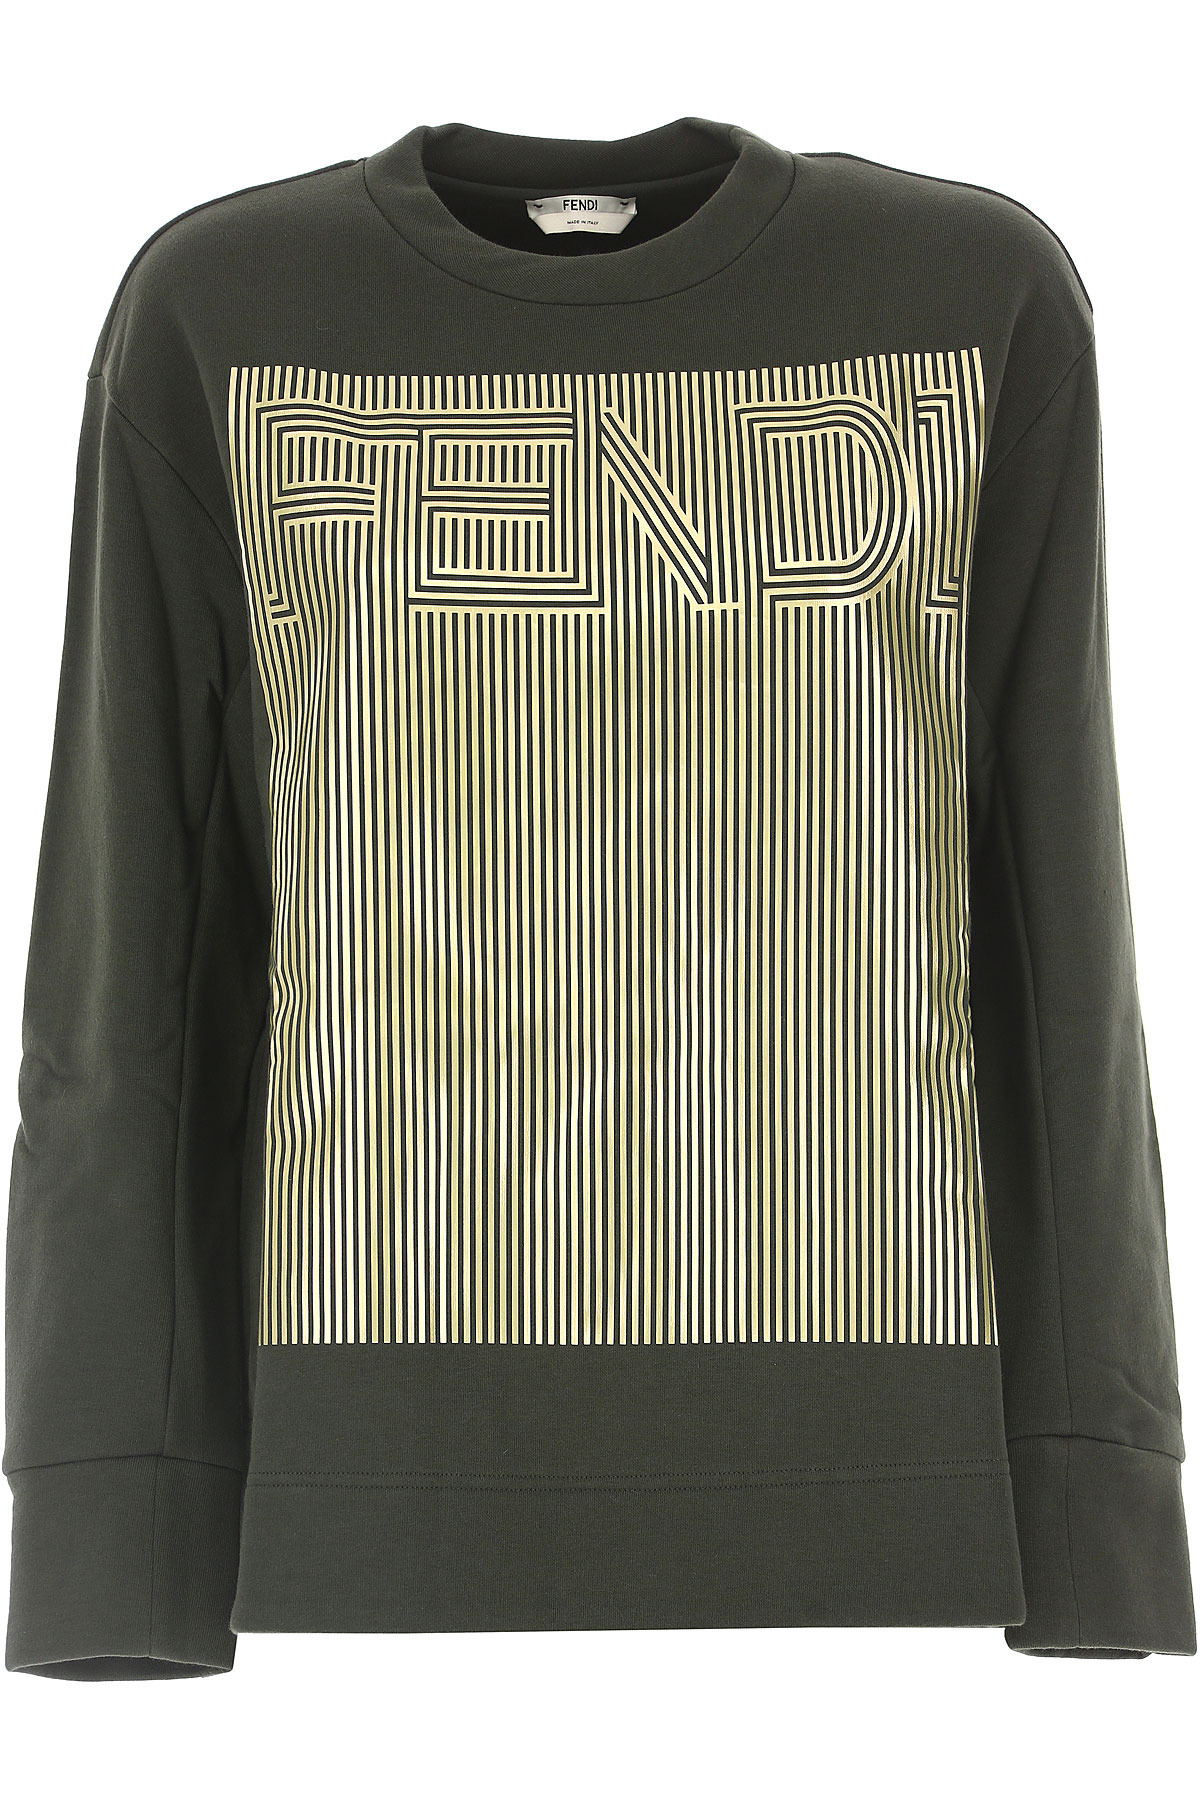 Fendi Sweatshirt for Women , Noir, Coton, 2017, 38 40